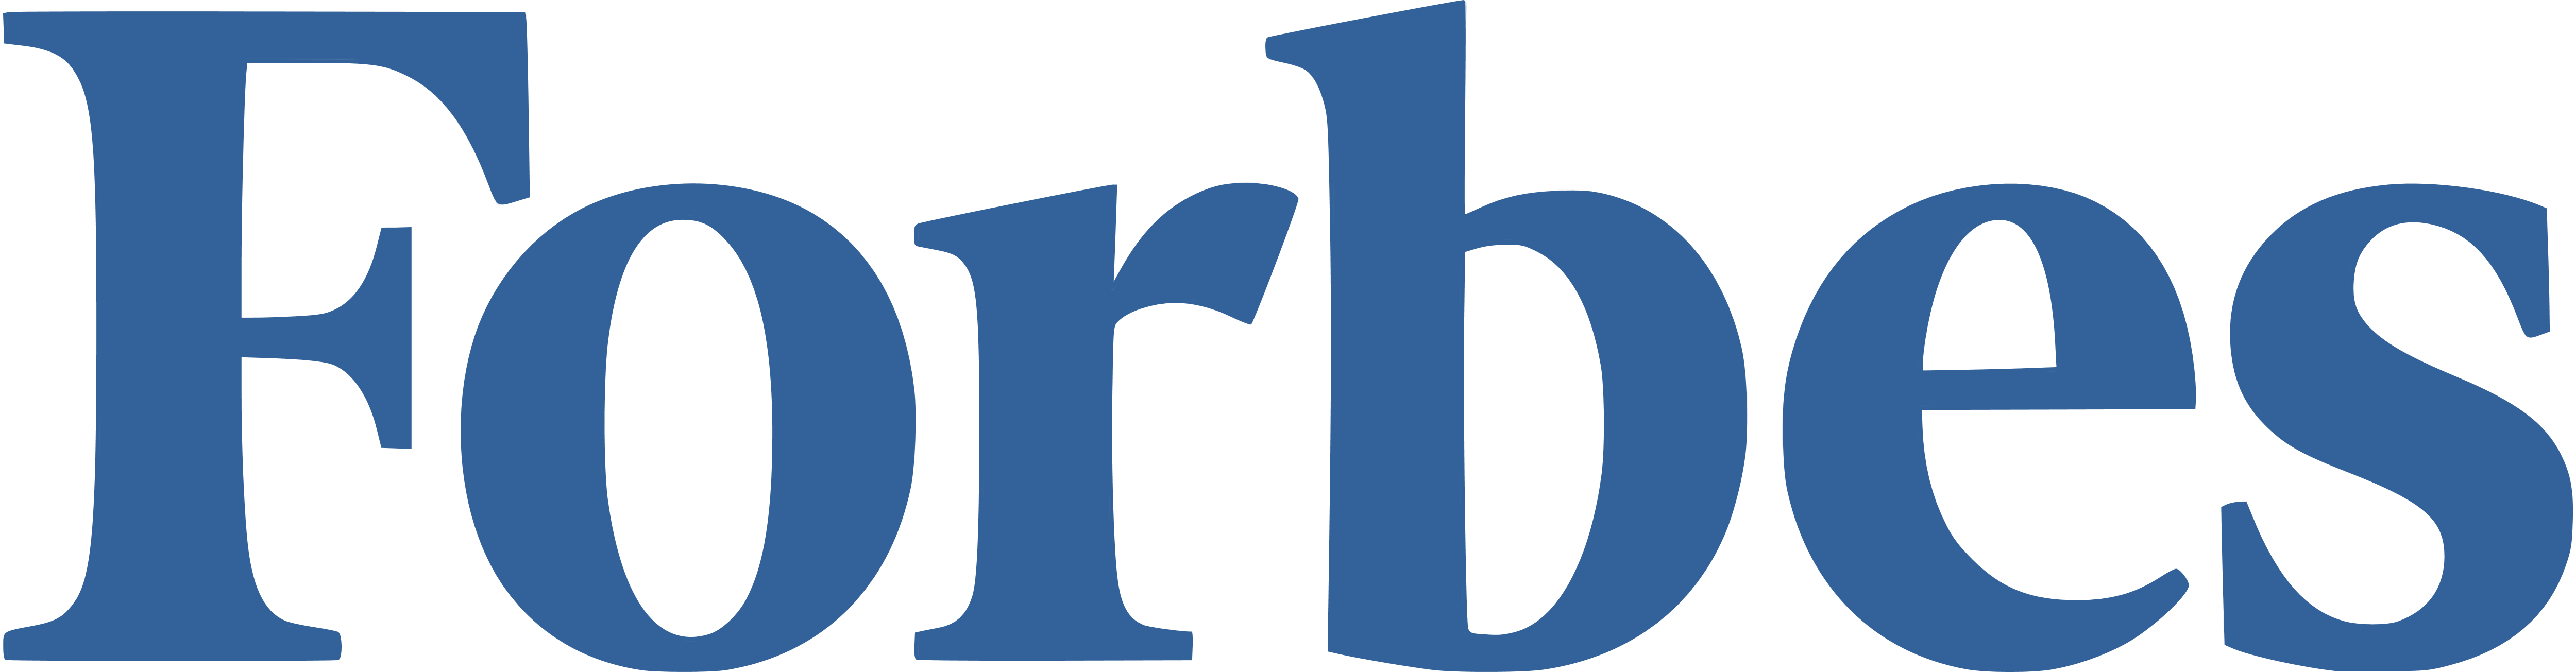 Forbes-logo - Conviva